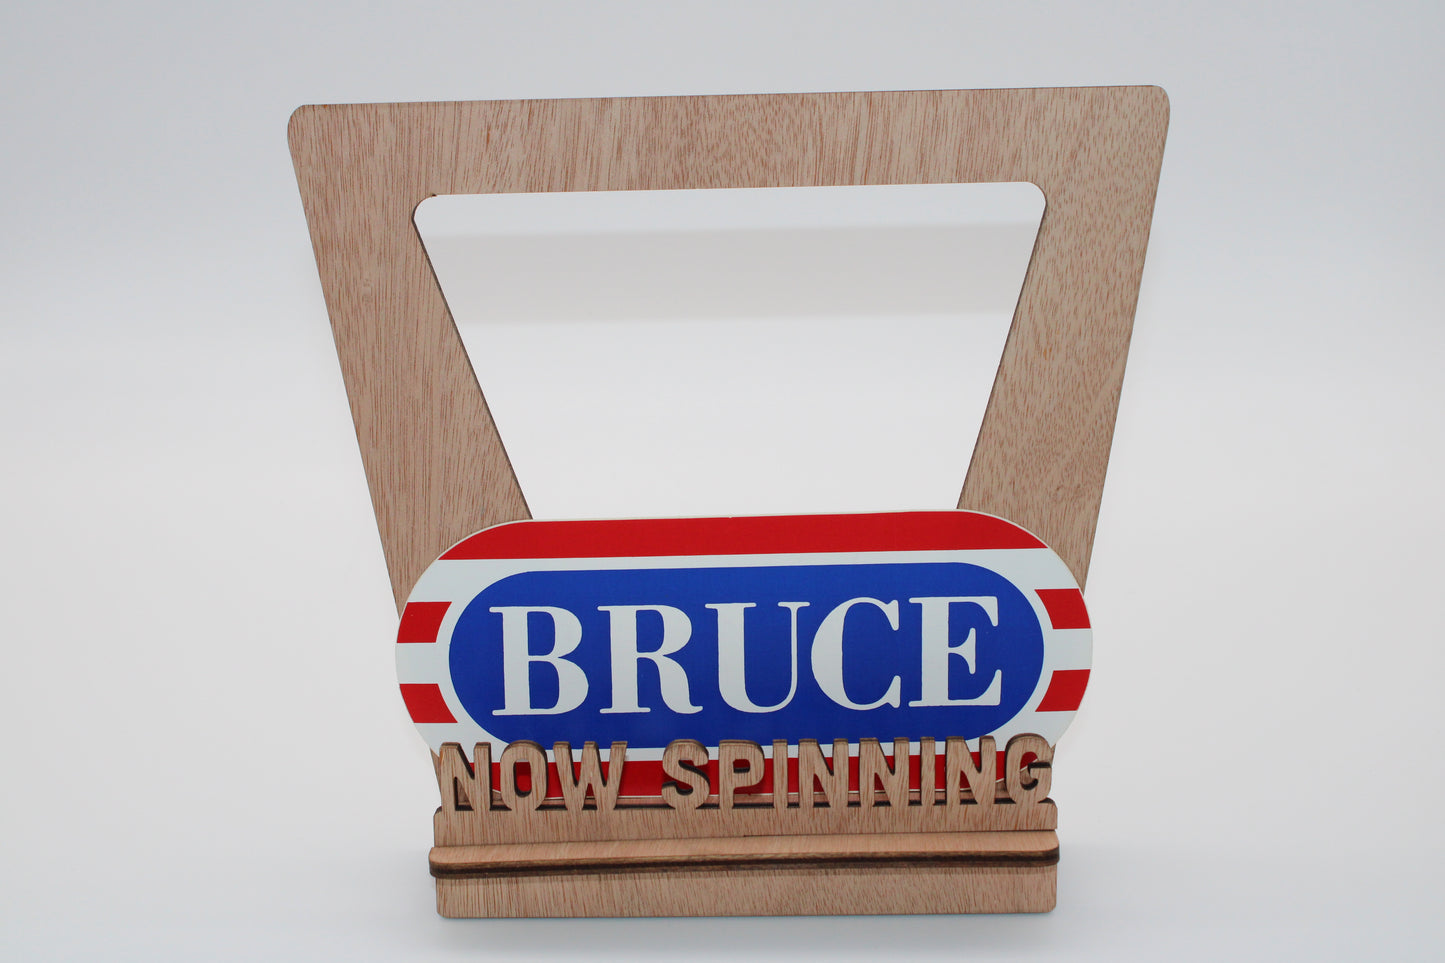 Bruce Springsteen Original Bruce "Bumper Sticker" 1984 Tour